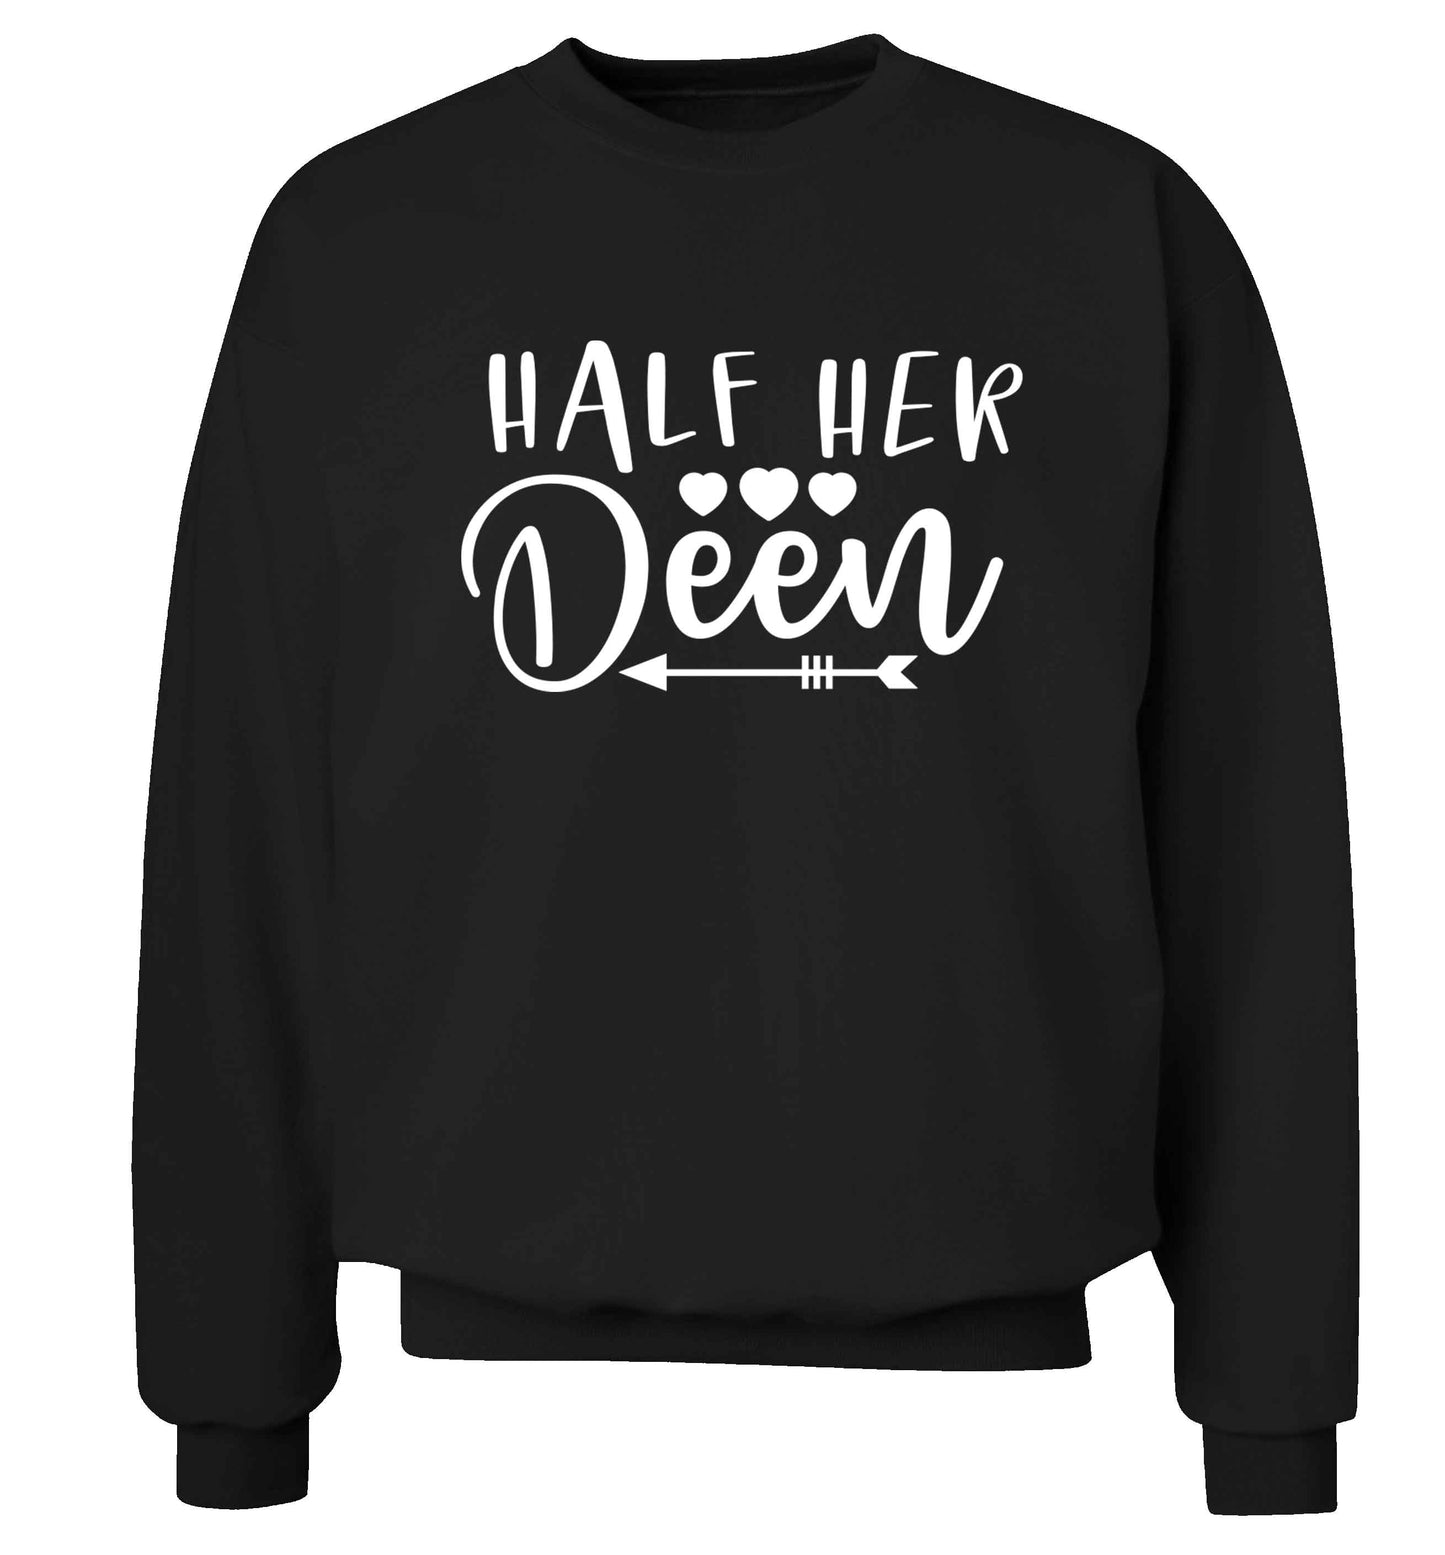 Half her deen Adult's unisex black Sweater 2XL